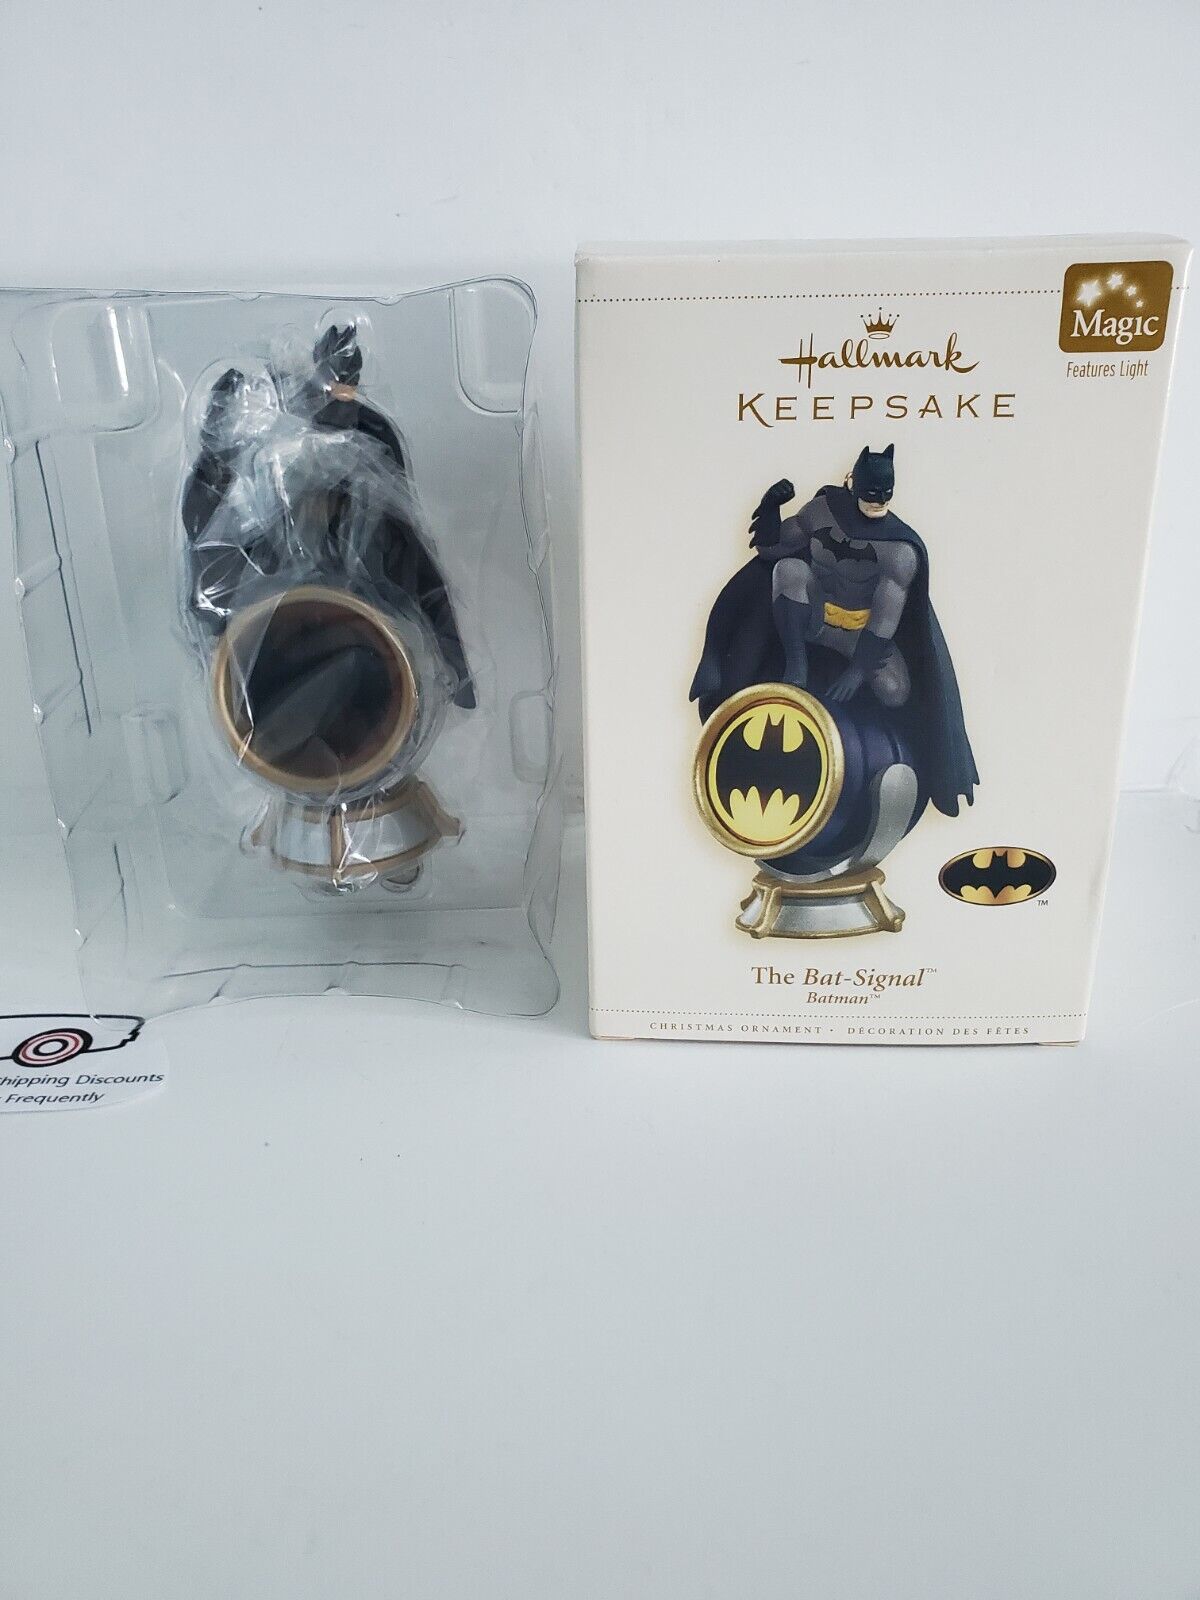 Brand NEW!!! 2006 Hallmark QXI6153 "The Bat-Signal" Batman Keepsake Ornament